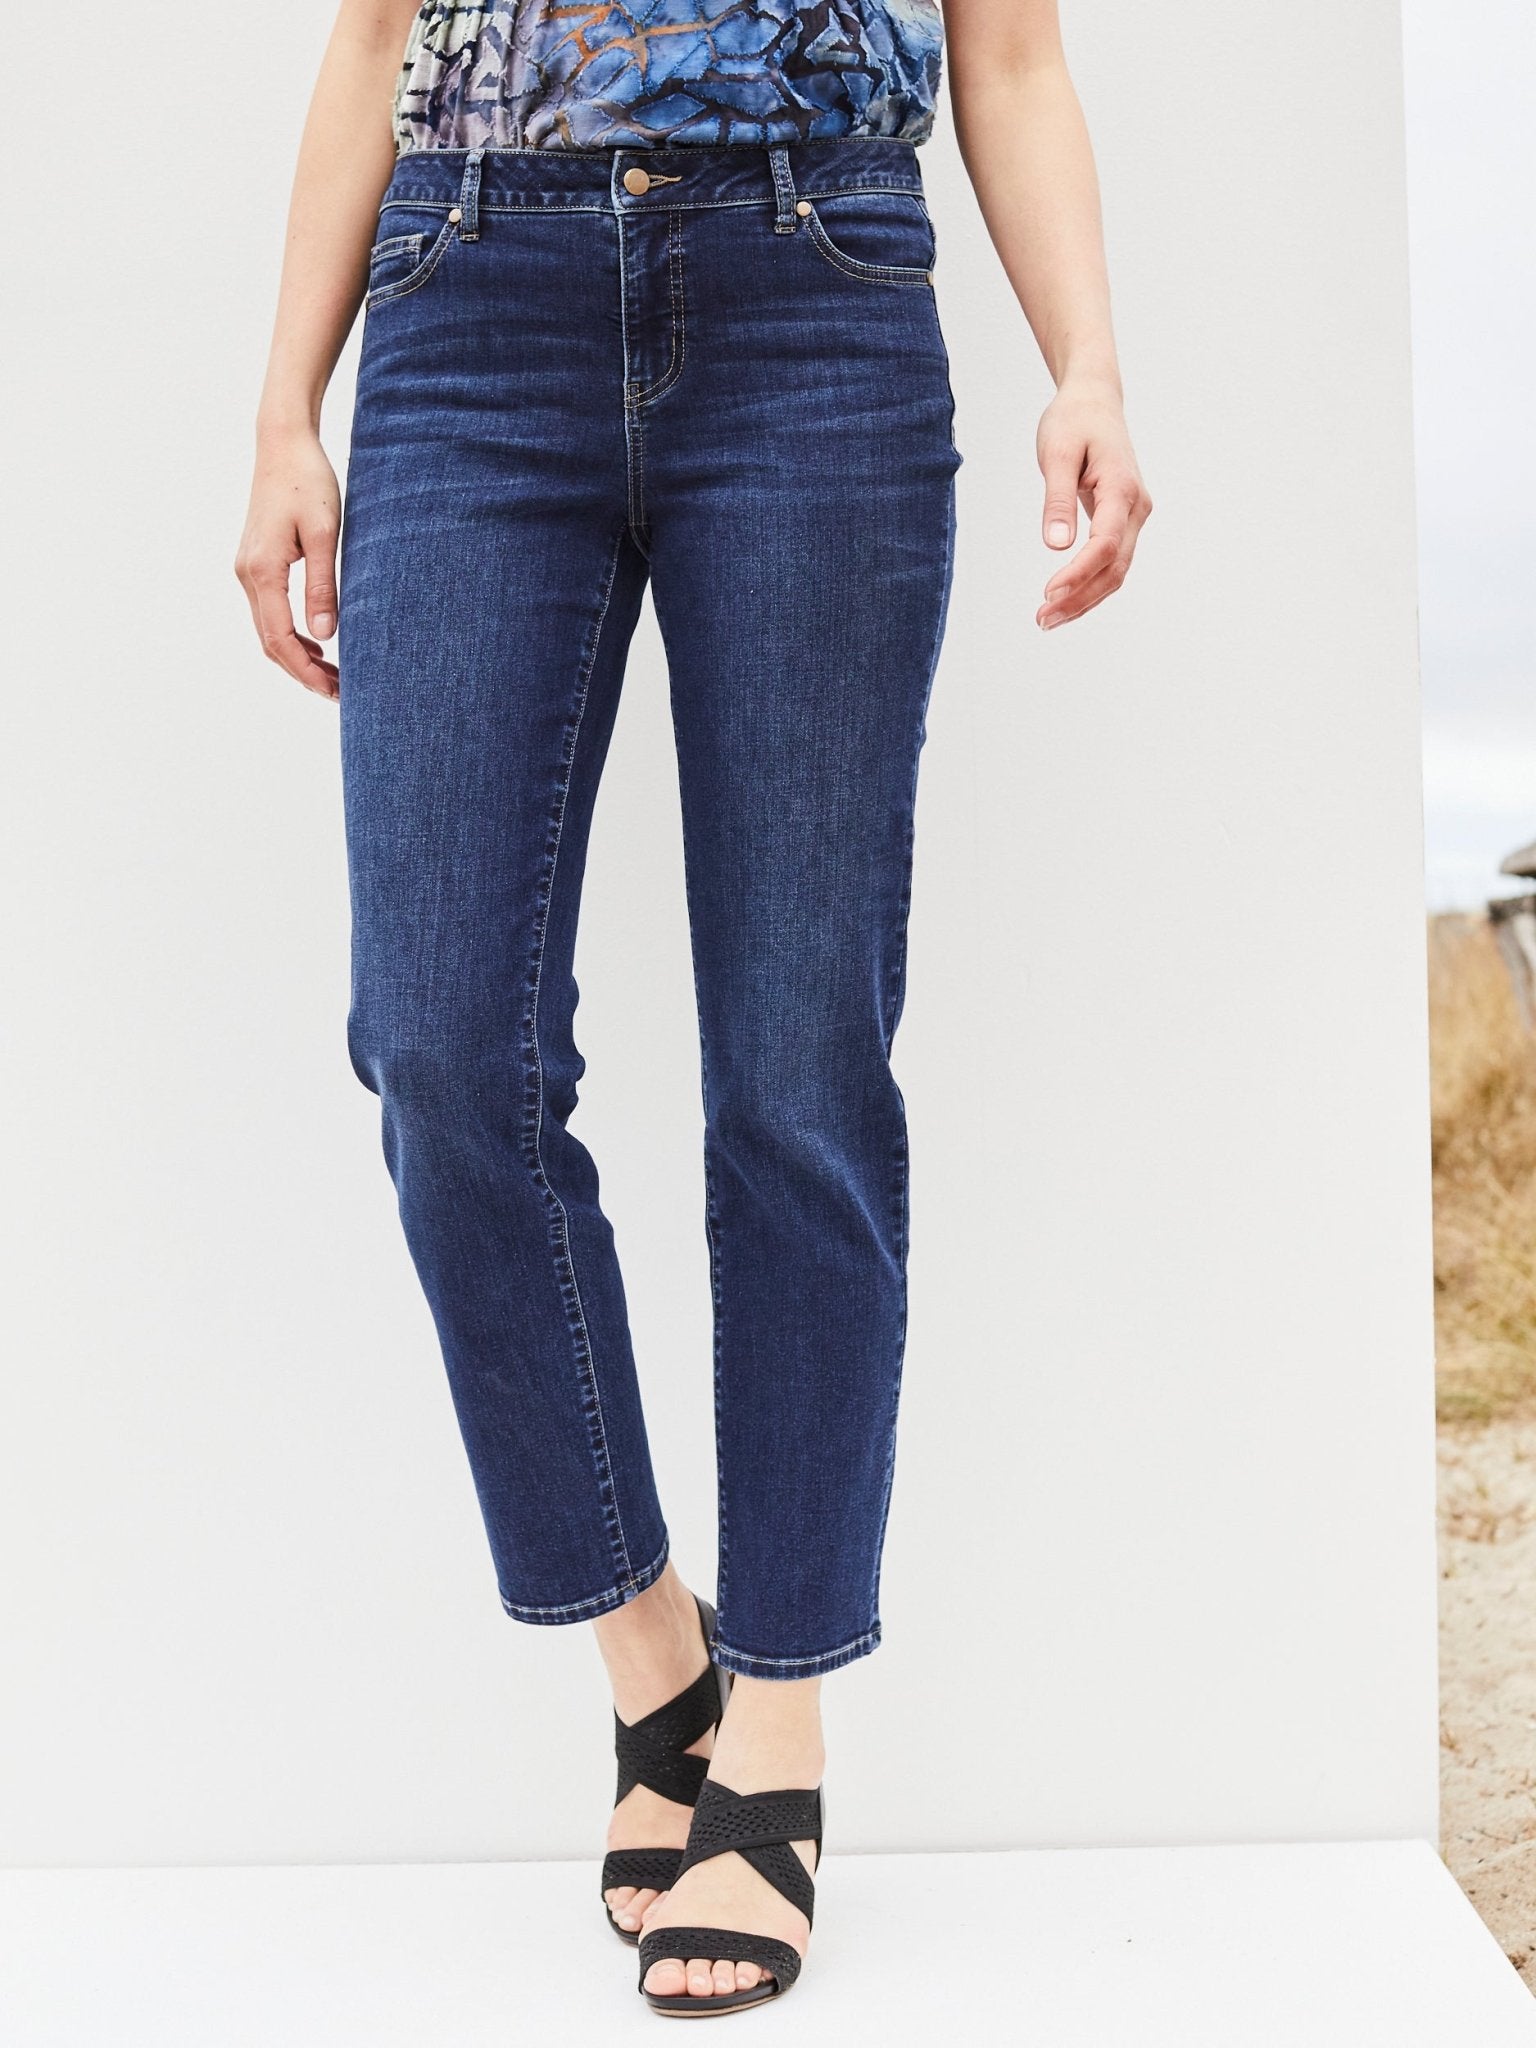 Westport Signature Straight Leg Denim Jeans - DressbarnClothing